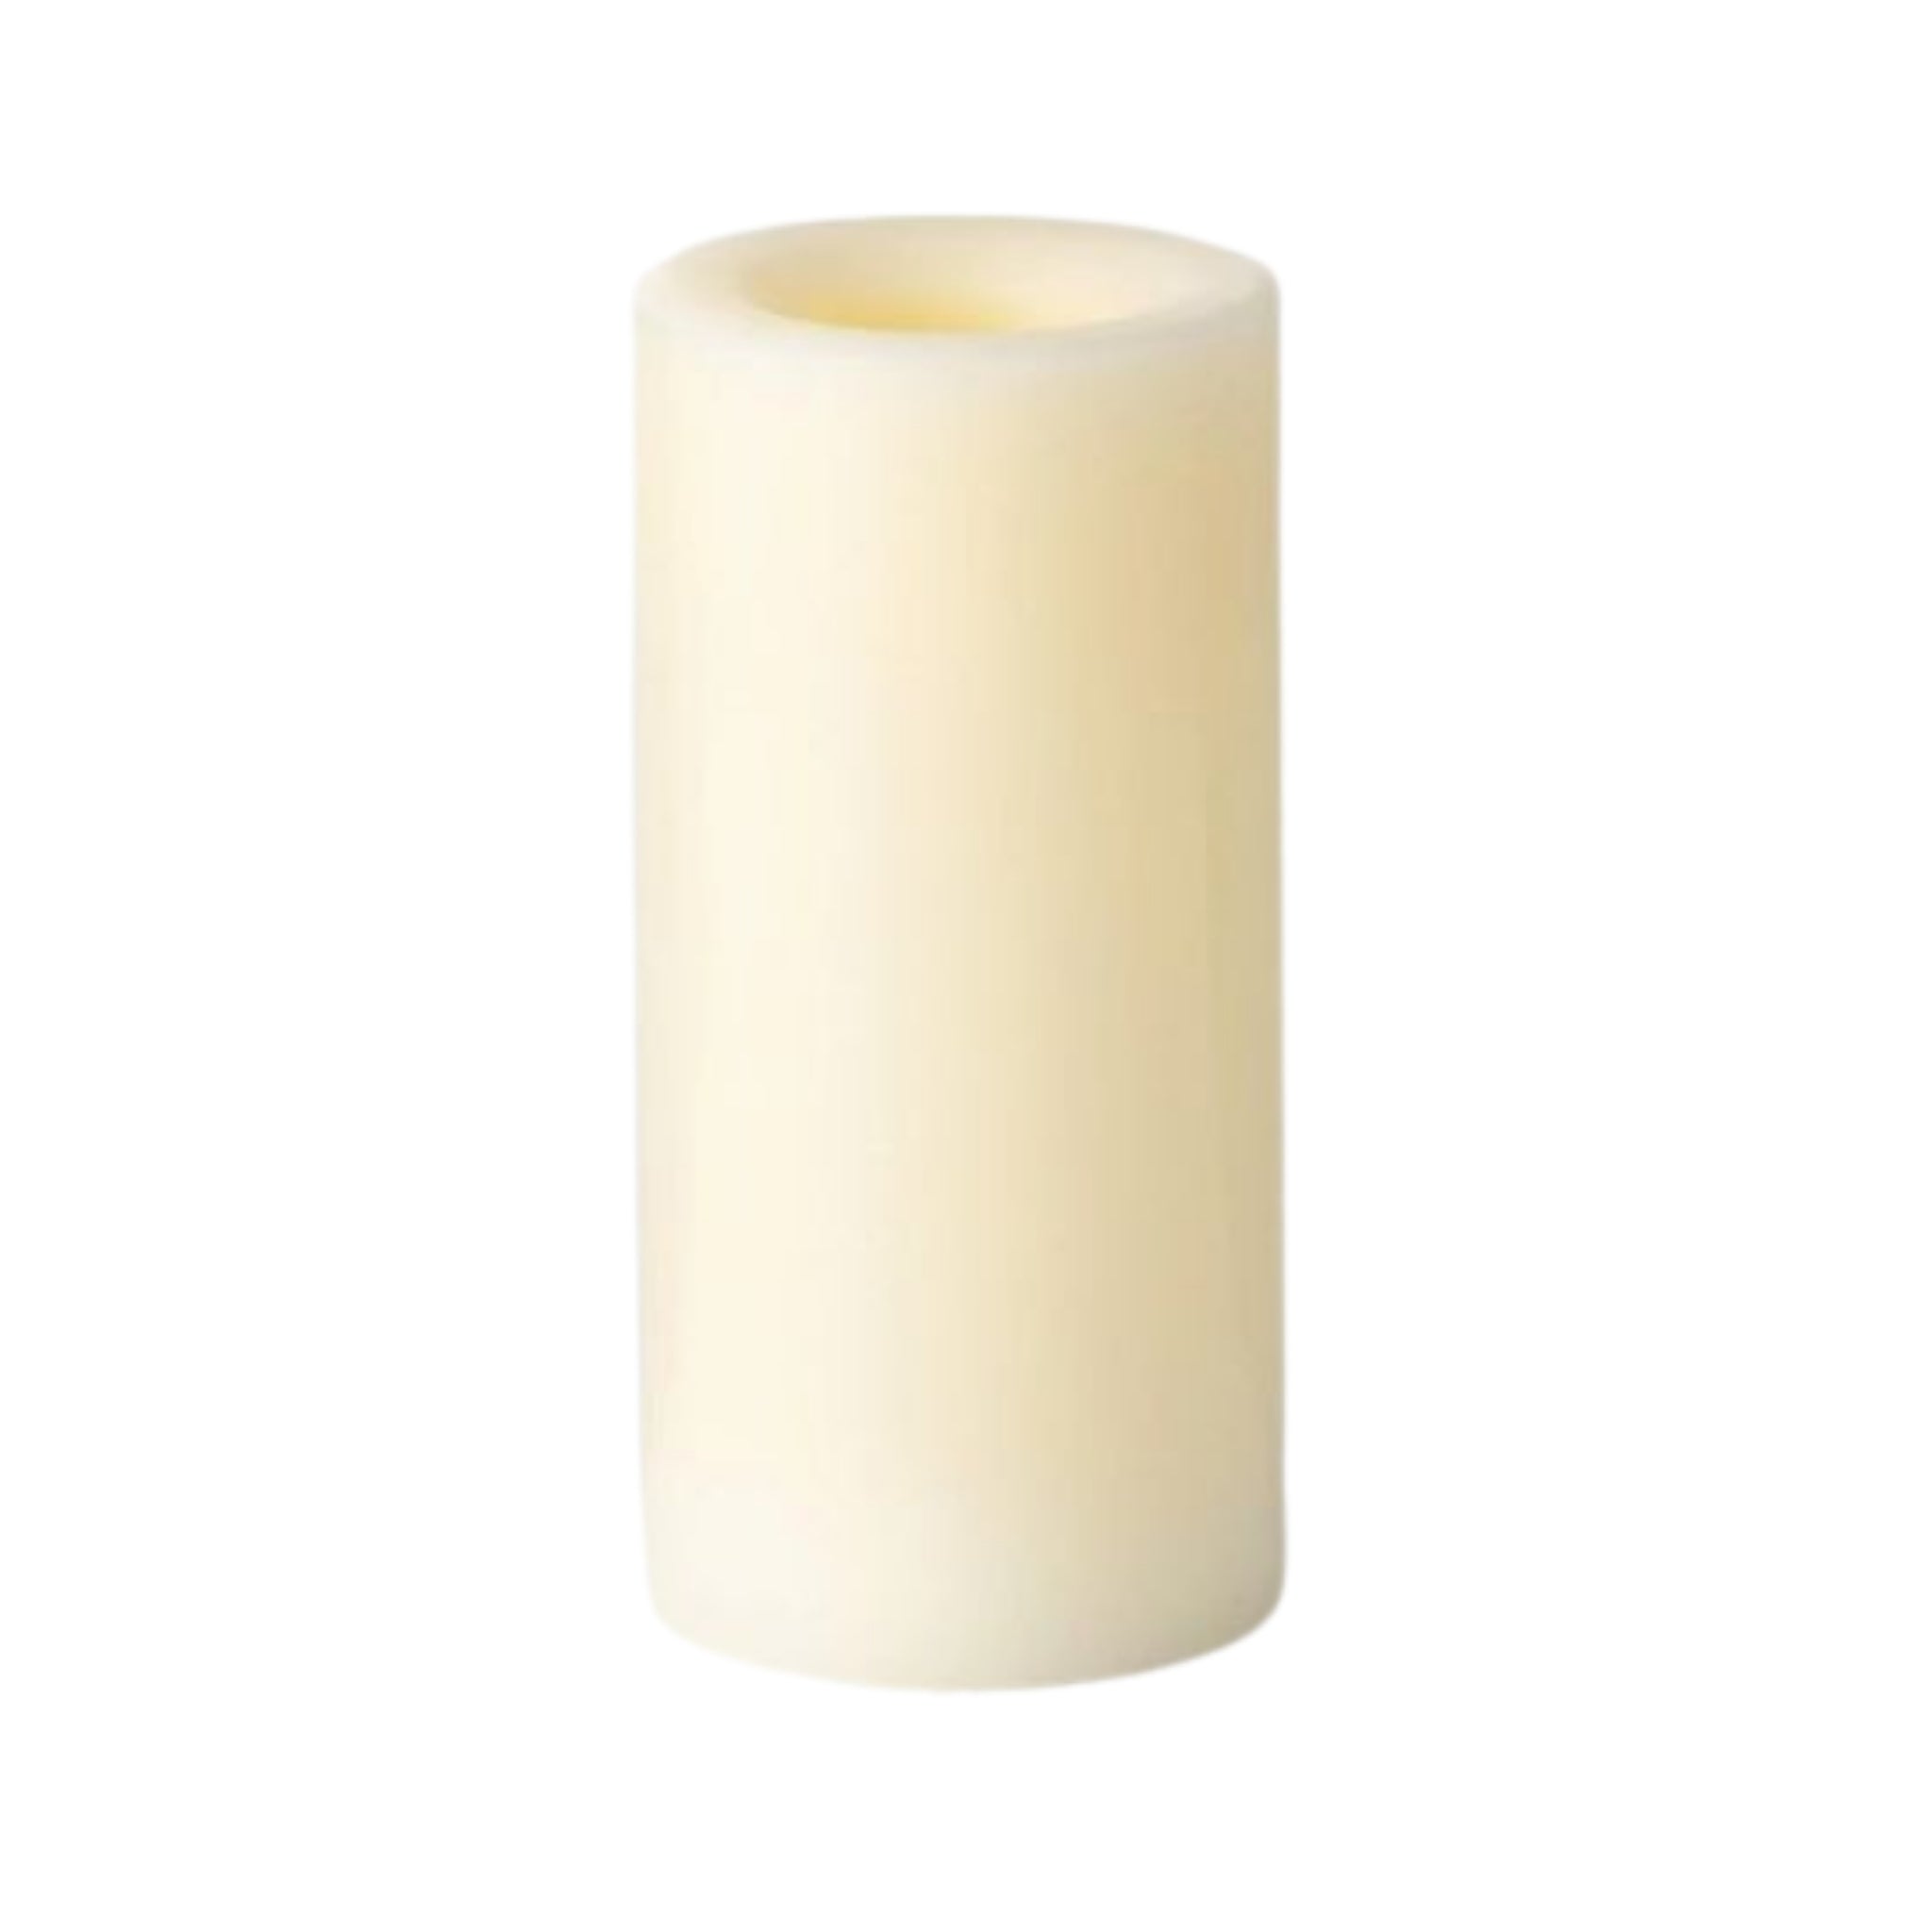 outdoor pillar candle 3x3x6